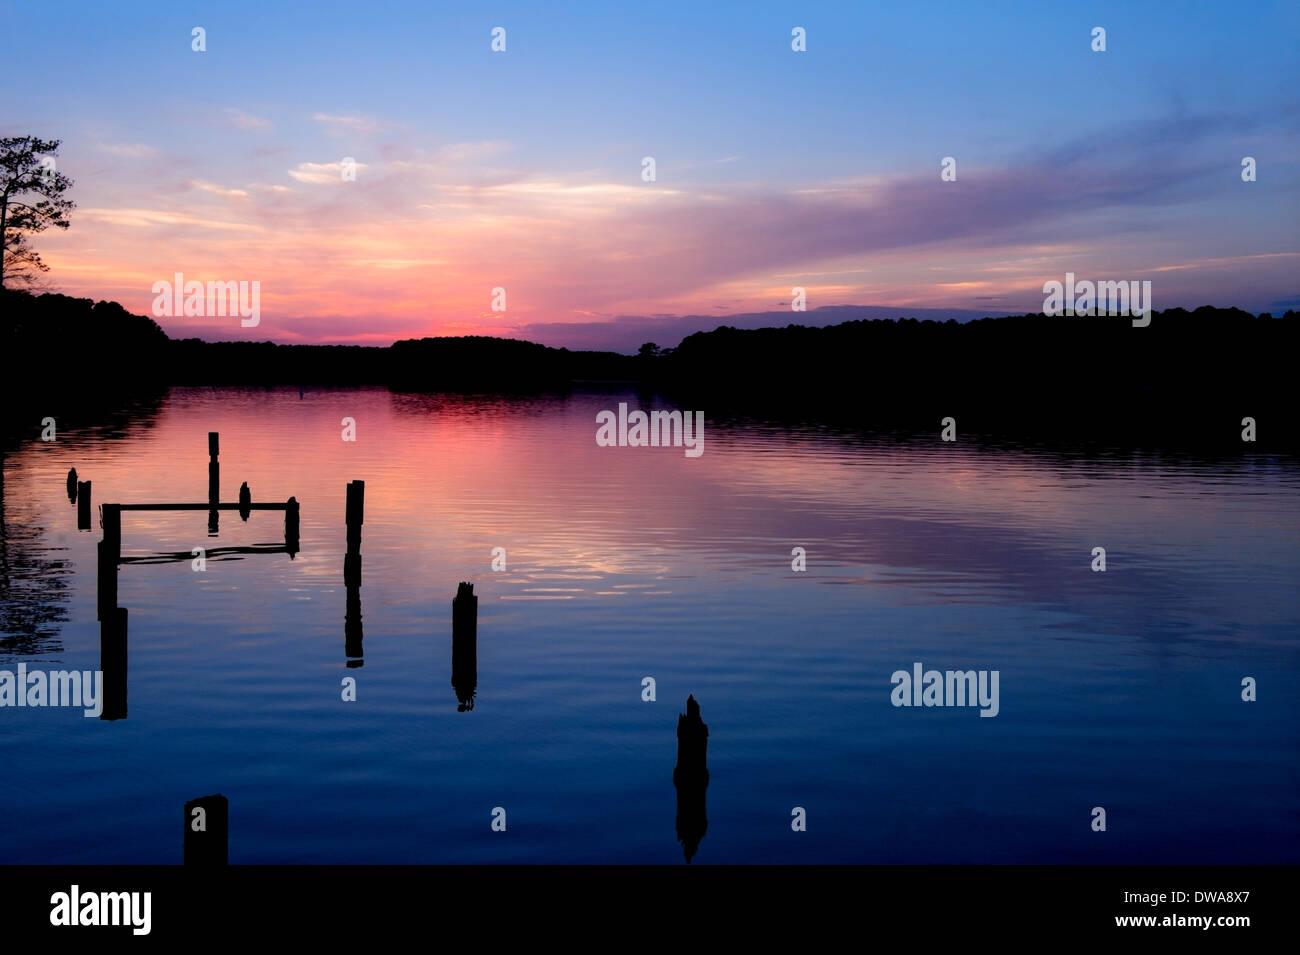 Sonnenuntergang im Whispering Pines Lake, North Carolina. Auch bekannt als Stockfoto